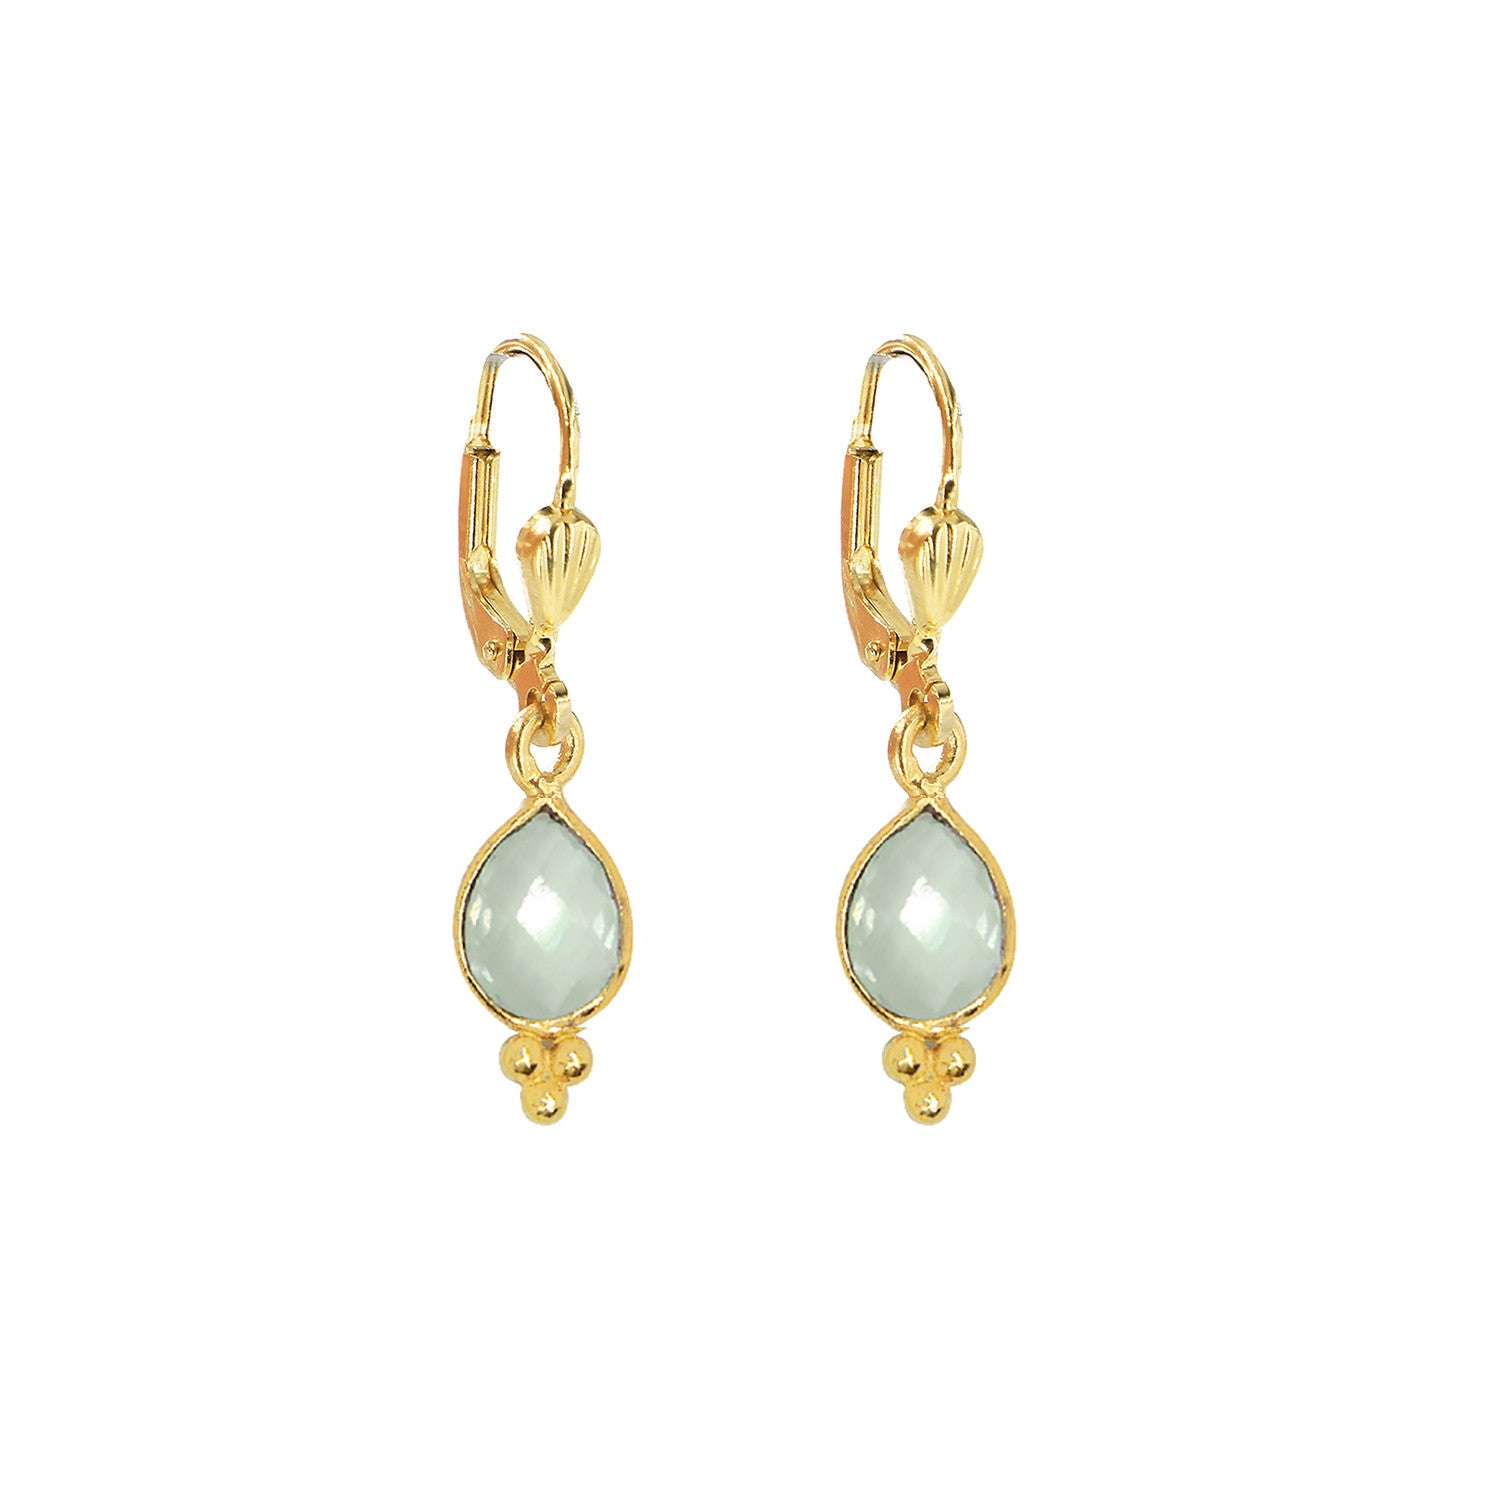 Thalia earrings